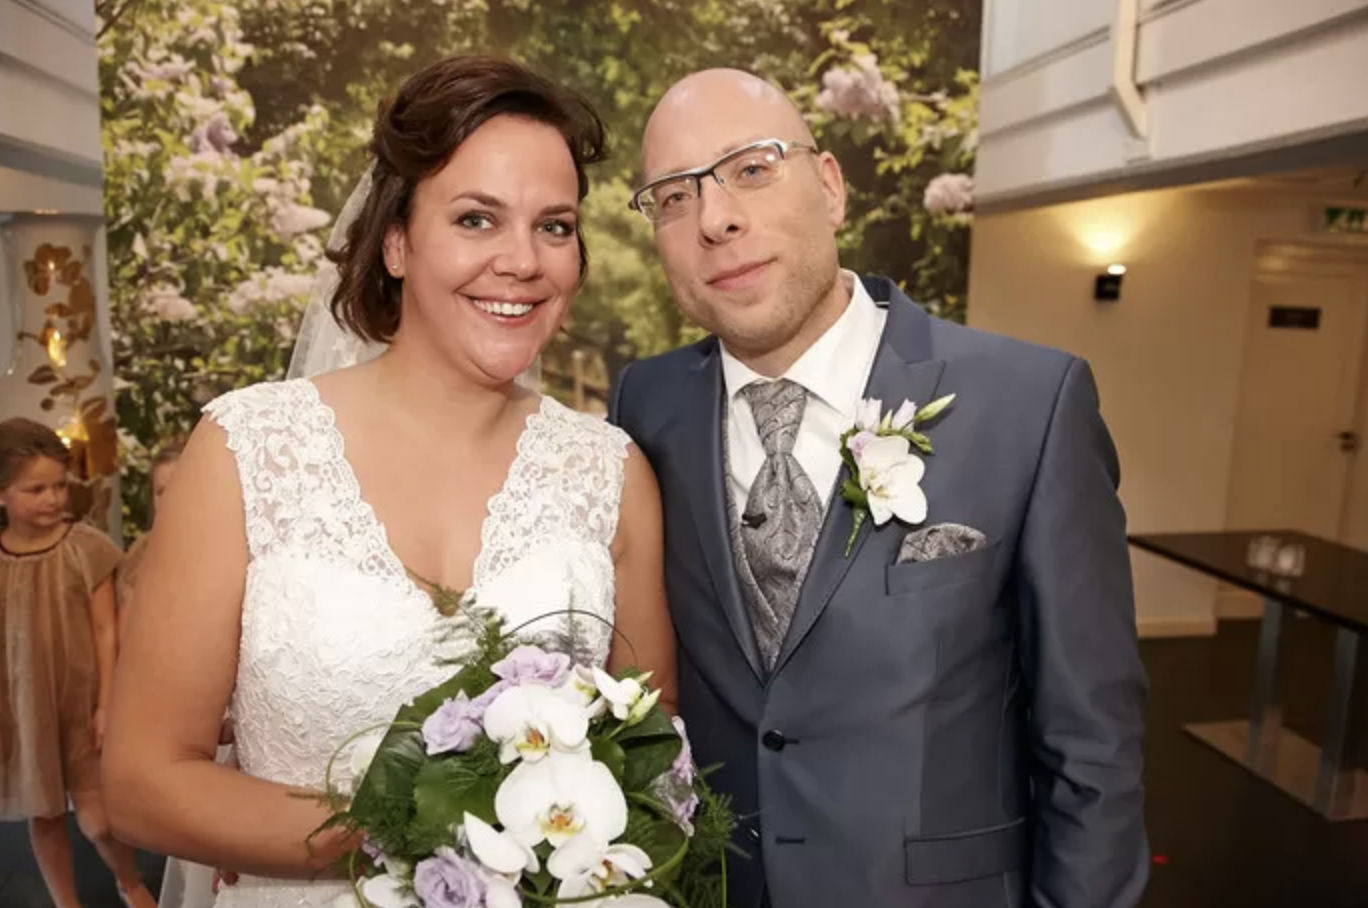 bram en patty uit married at first sight al 8 jaar getrouwd: 'idioot experiment'